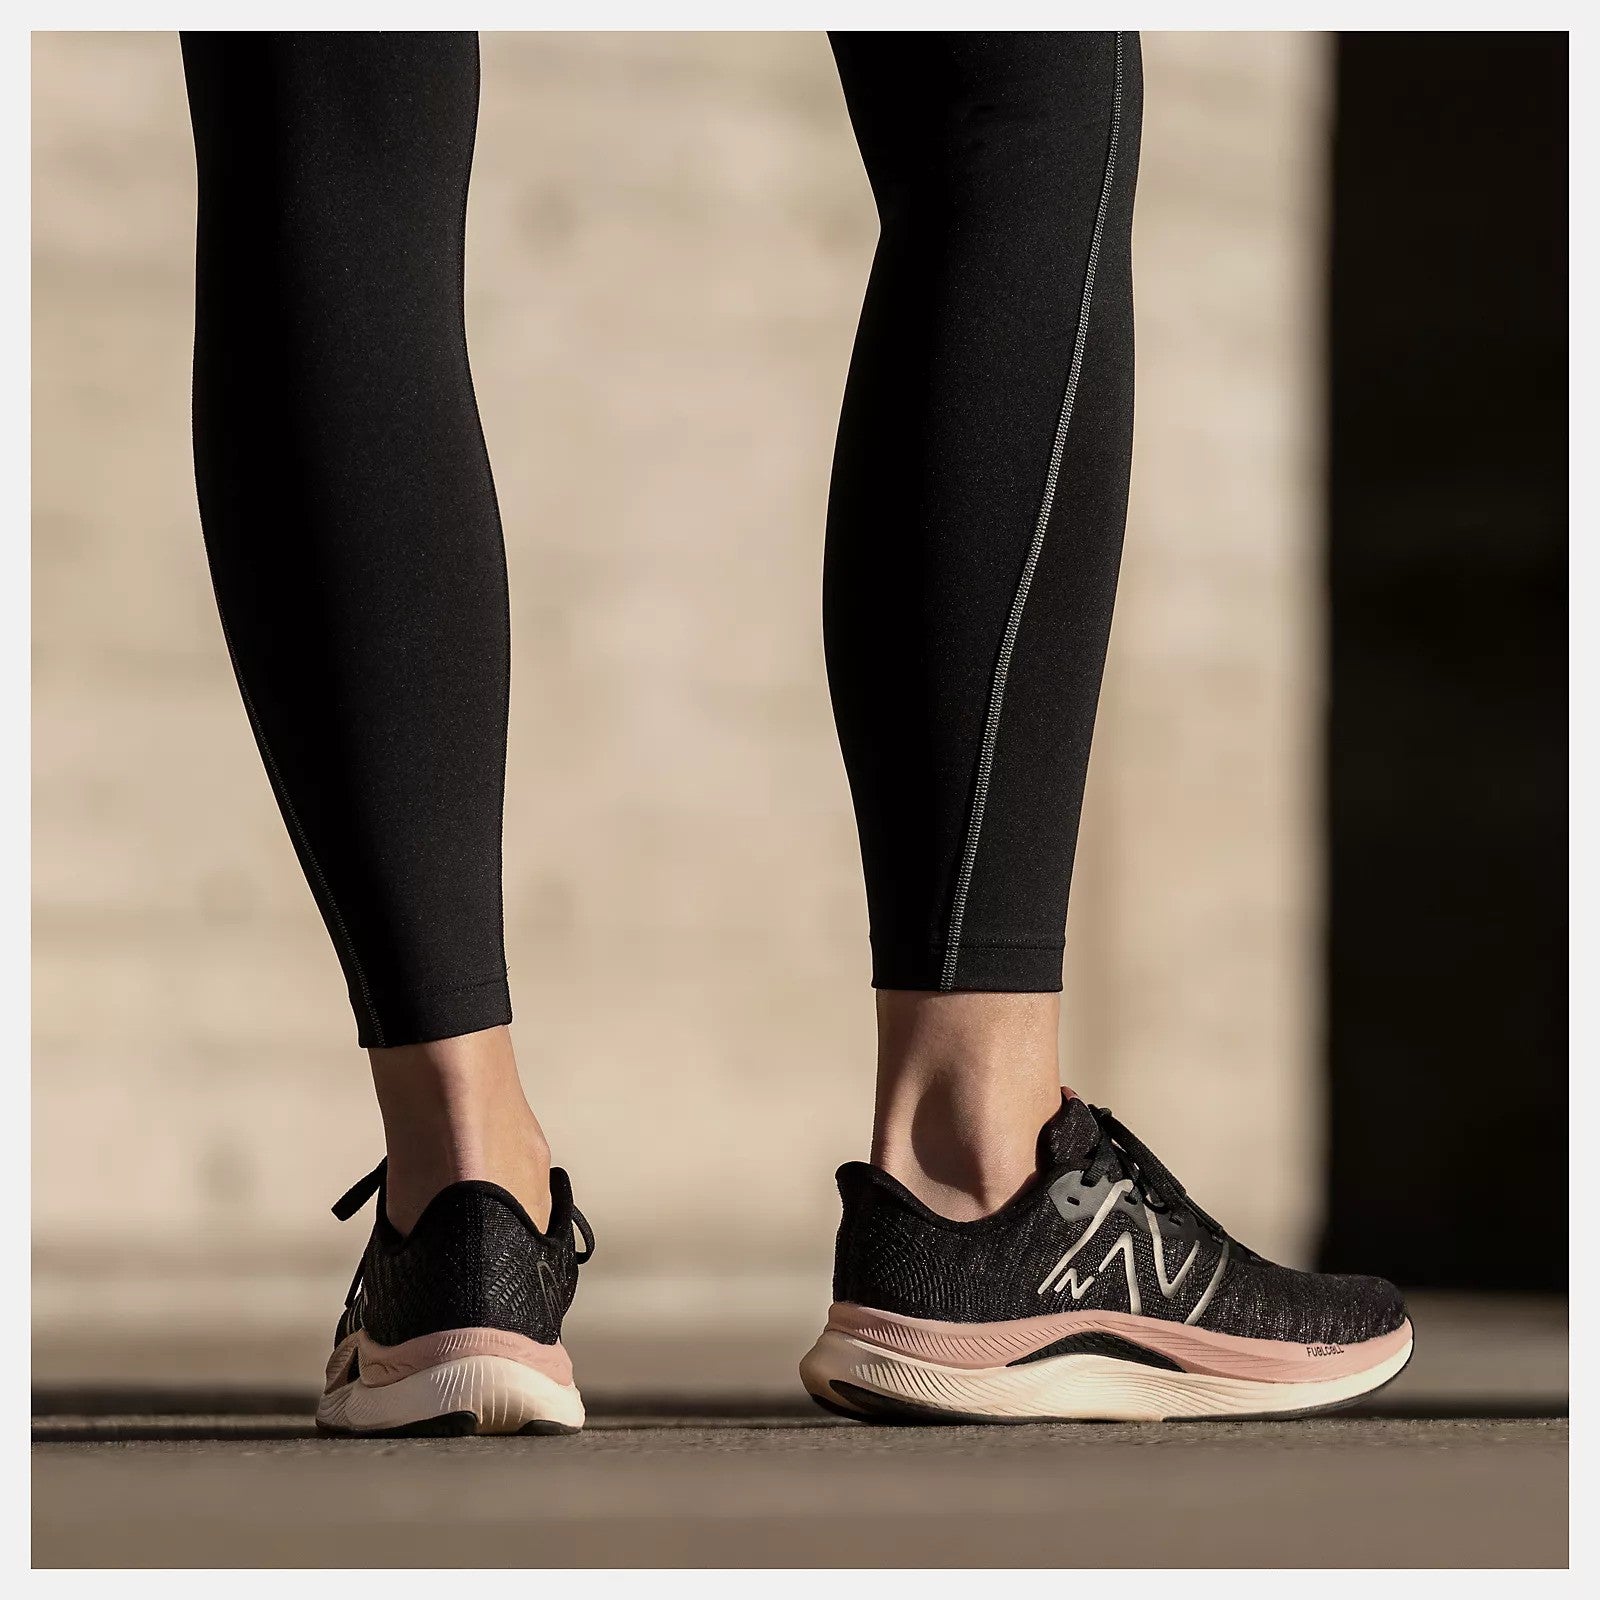 New Balance Women's FuelCell Propel v4 Shoe Black/Quartz Pink